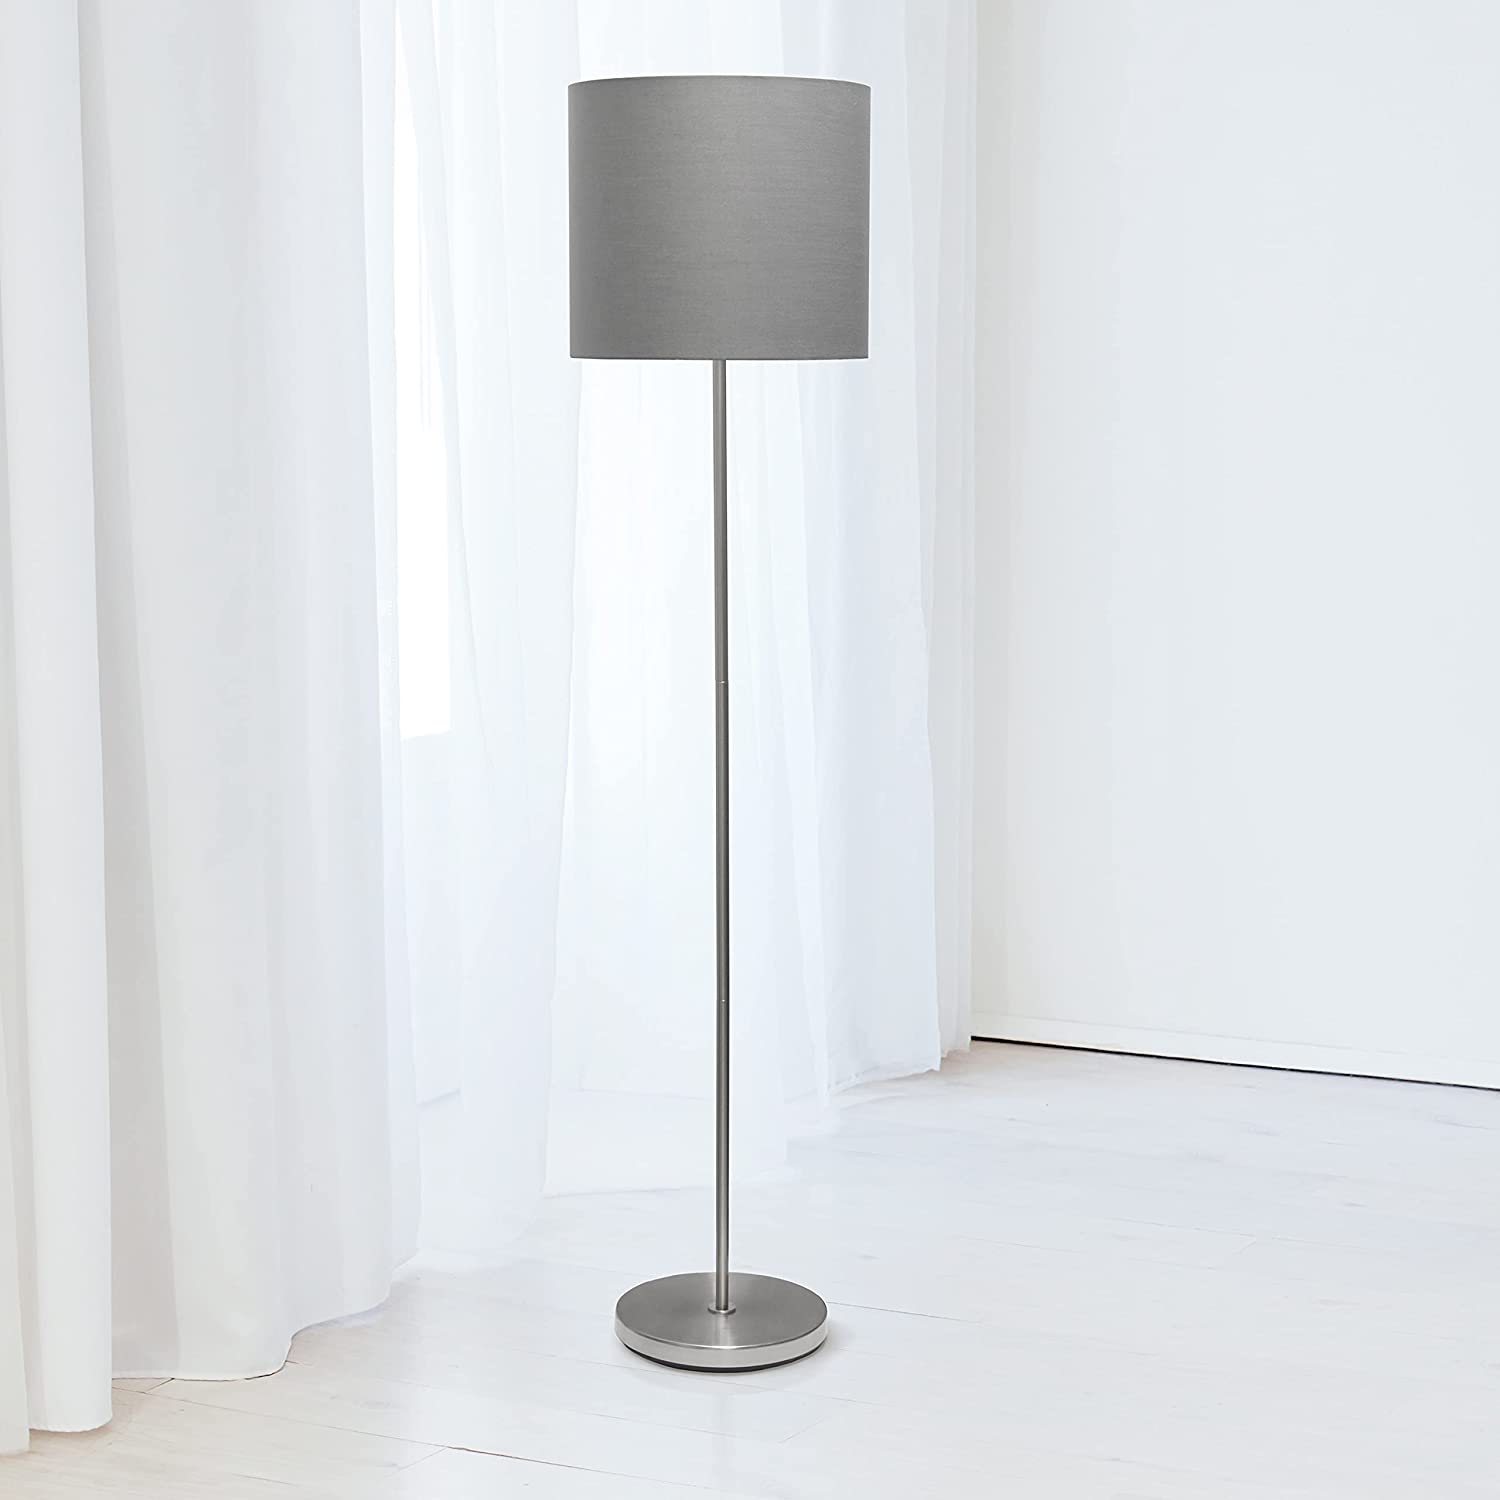 Simple Designs LF2004-GRY Floor Lamp, Gray